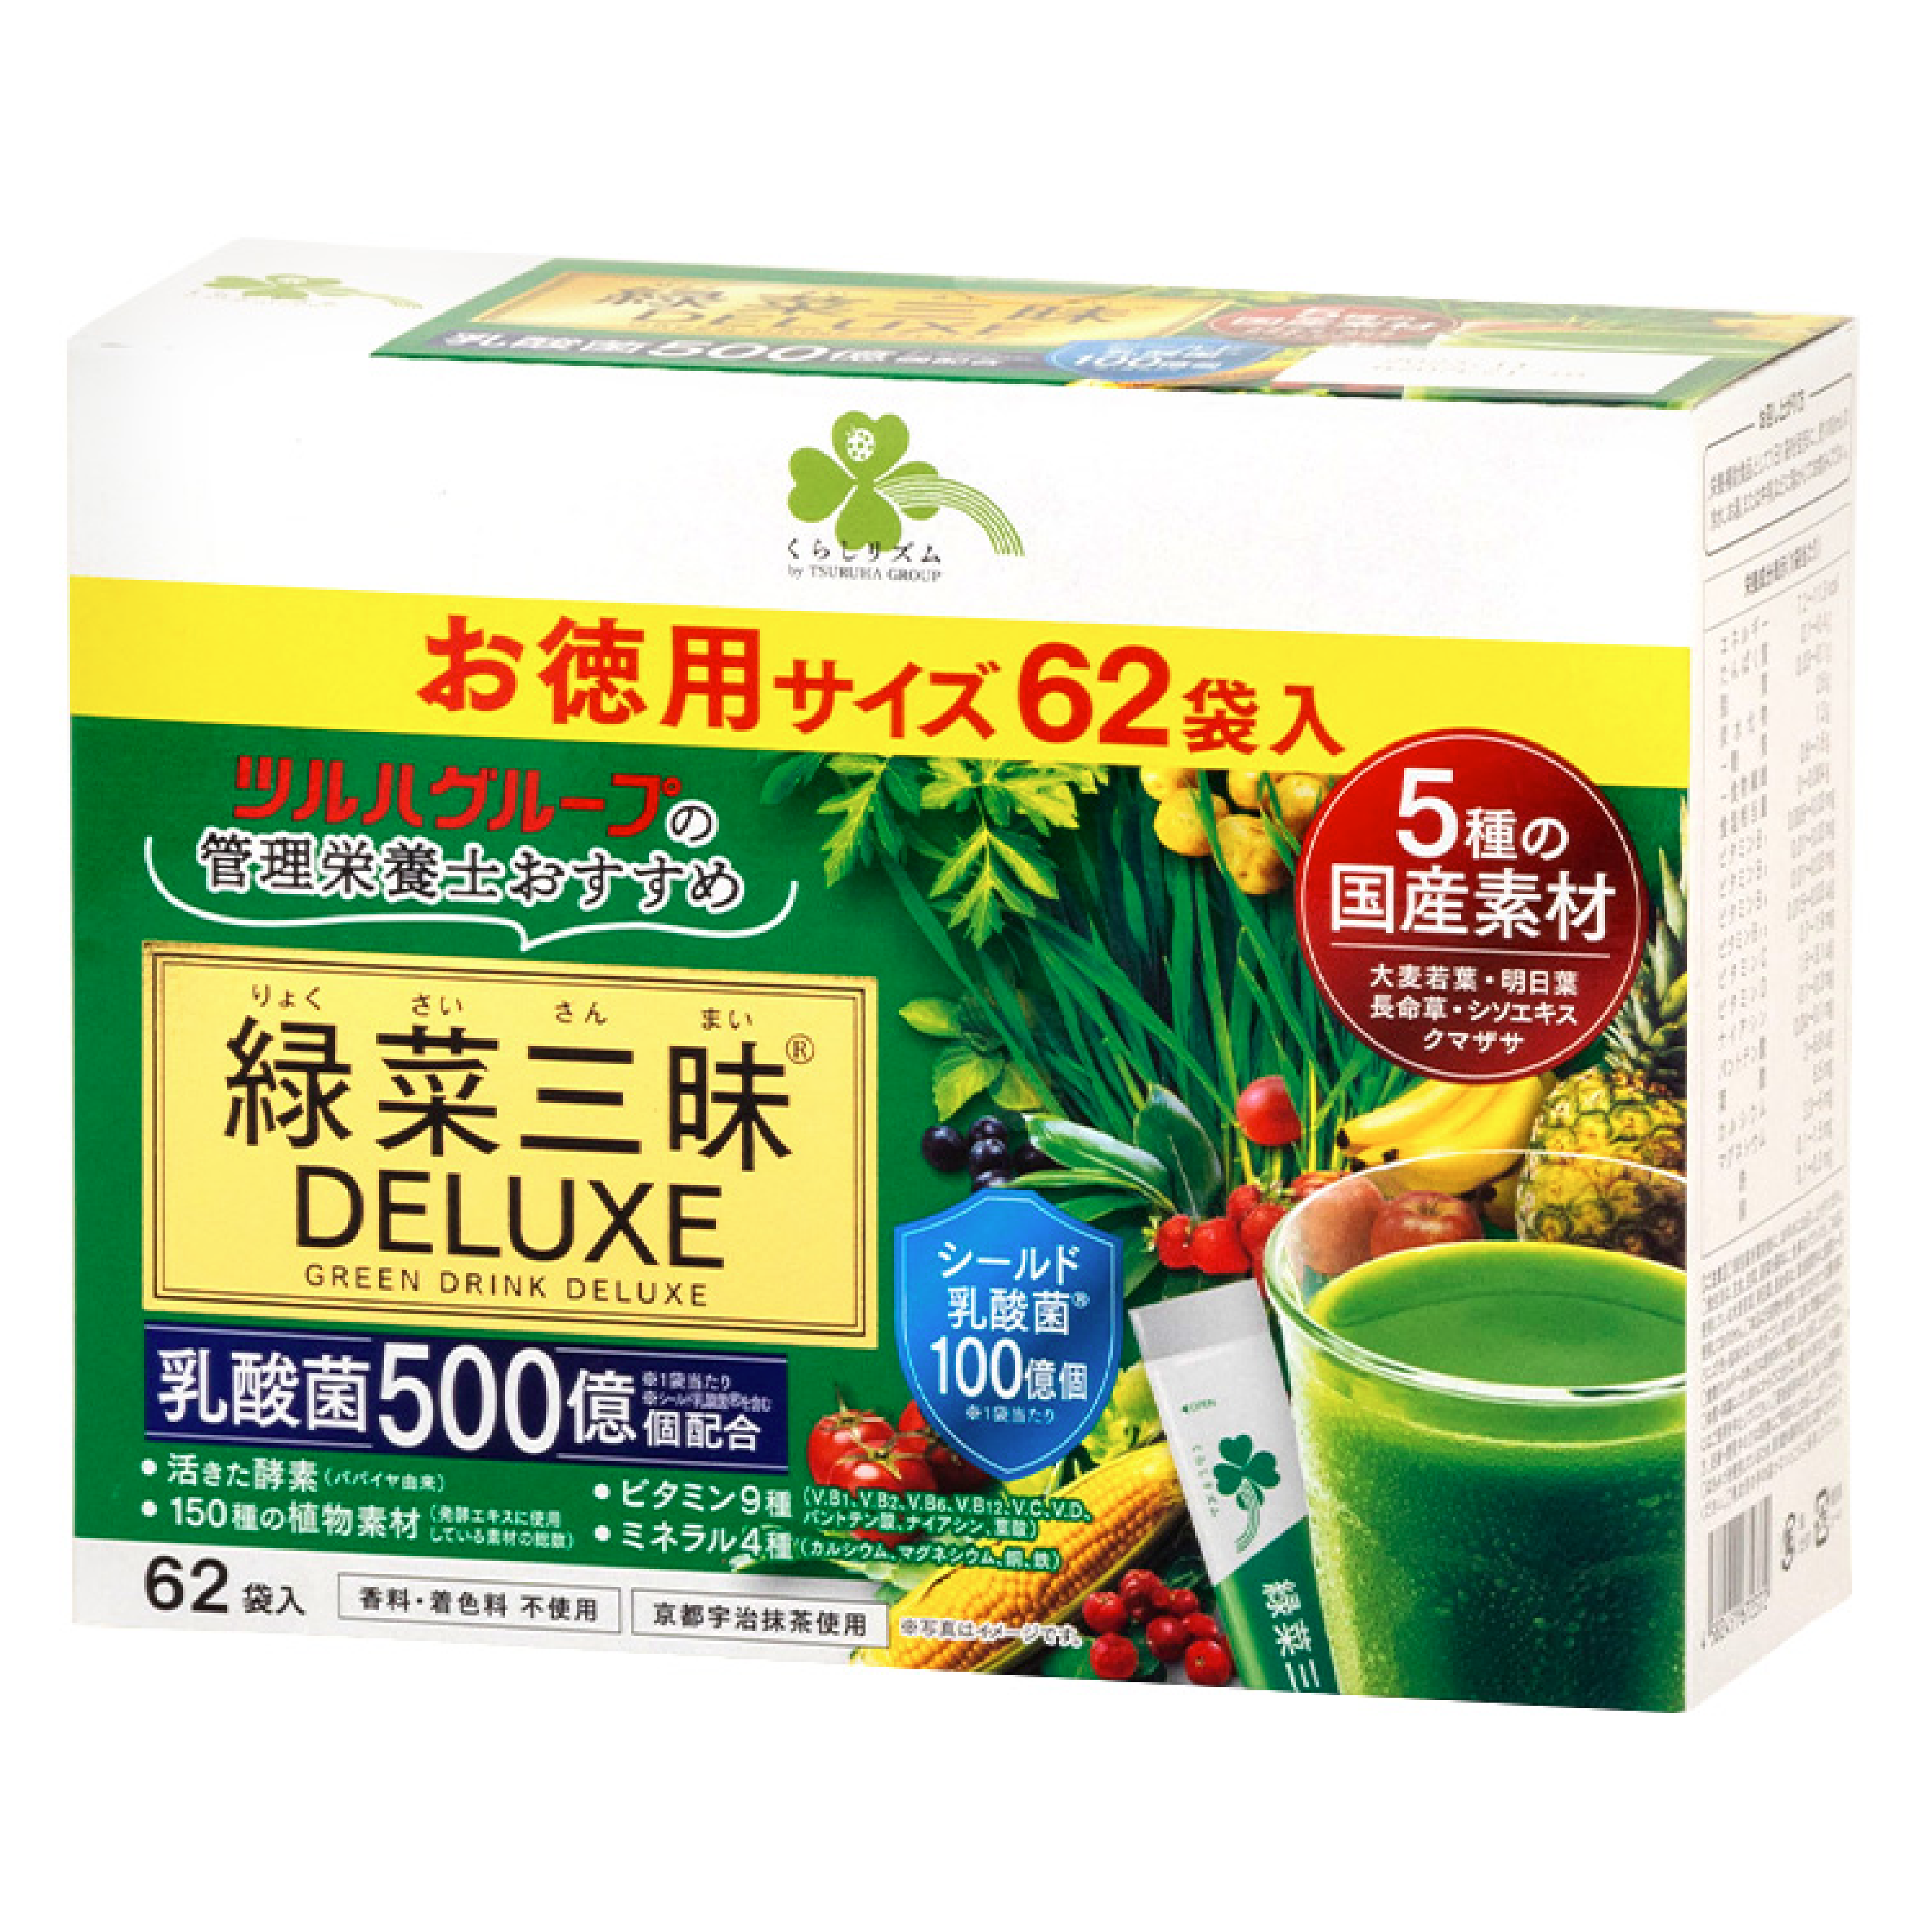 TSURUHA GROUP MERCHANDISING kurashi-rhythm 活節奏綠色蔬菜DX 62袋屏蔽乳酸細菌